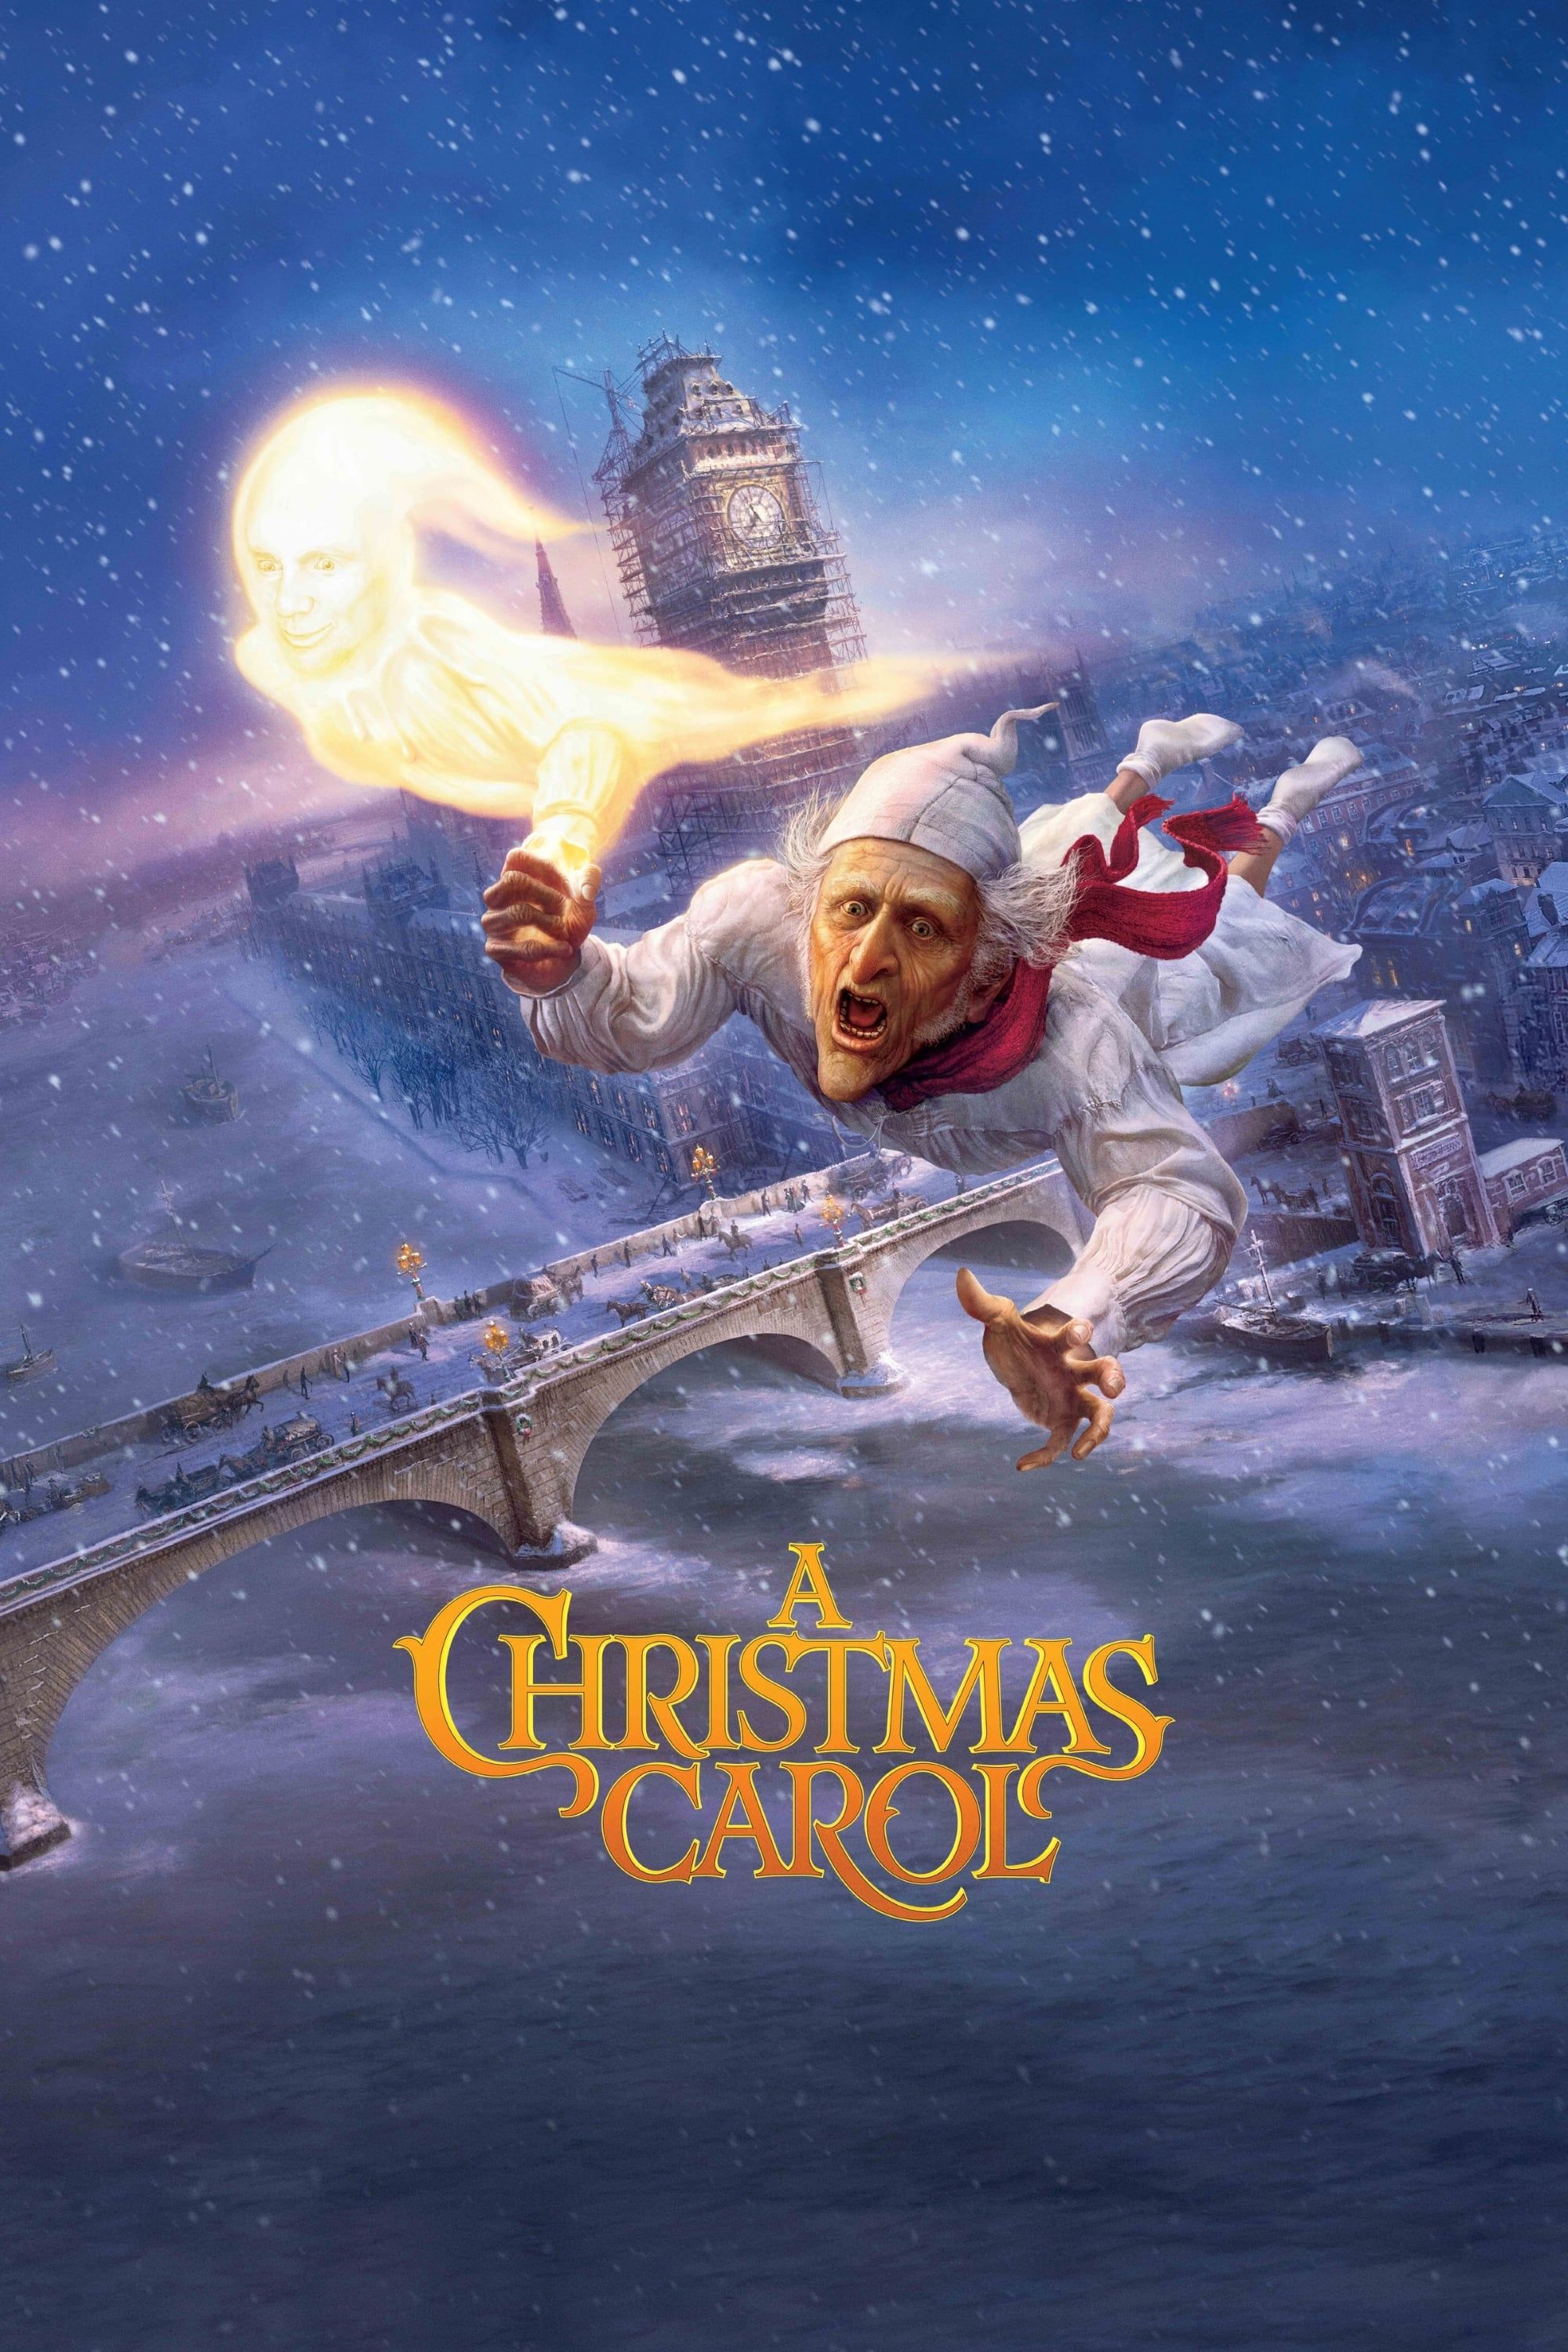 A Christmas Carol The Top 10 Performances of Ebenezer Scrooge